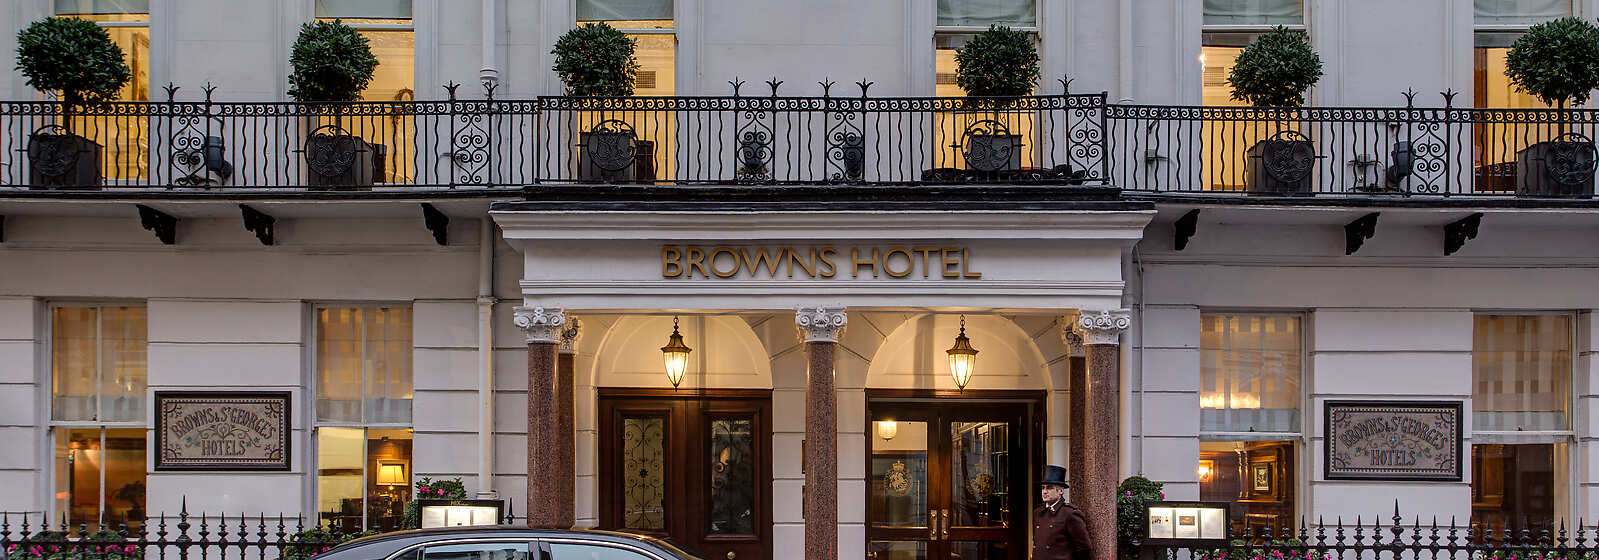 Brown's Hotel Exterior Shot